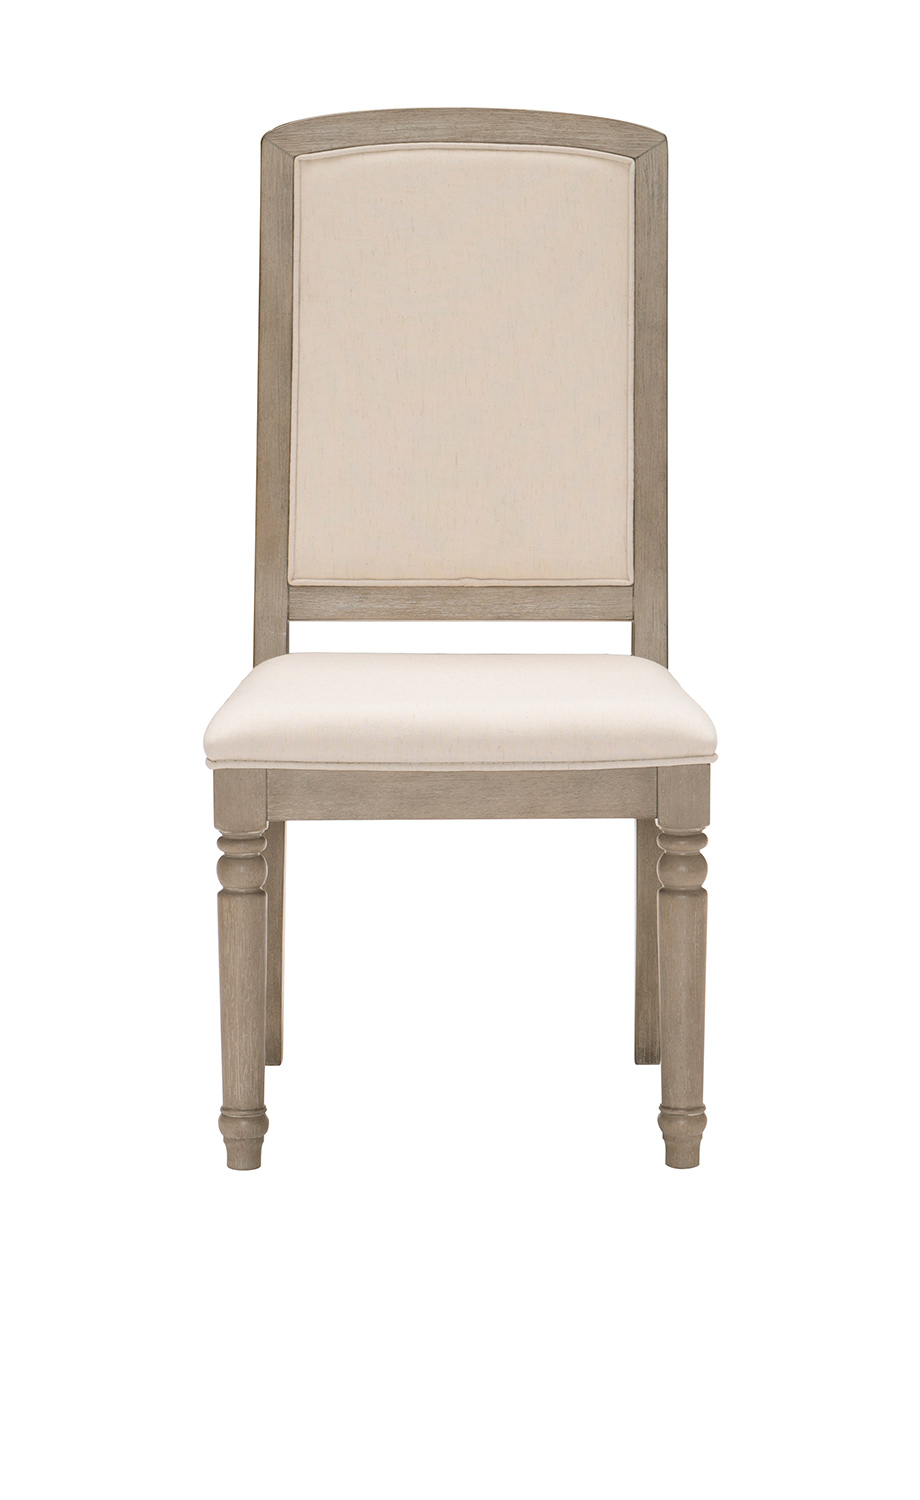 Homelegance Grayling Side Chair - Driftwood Gray